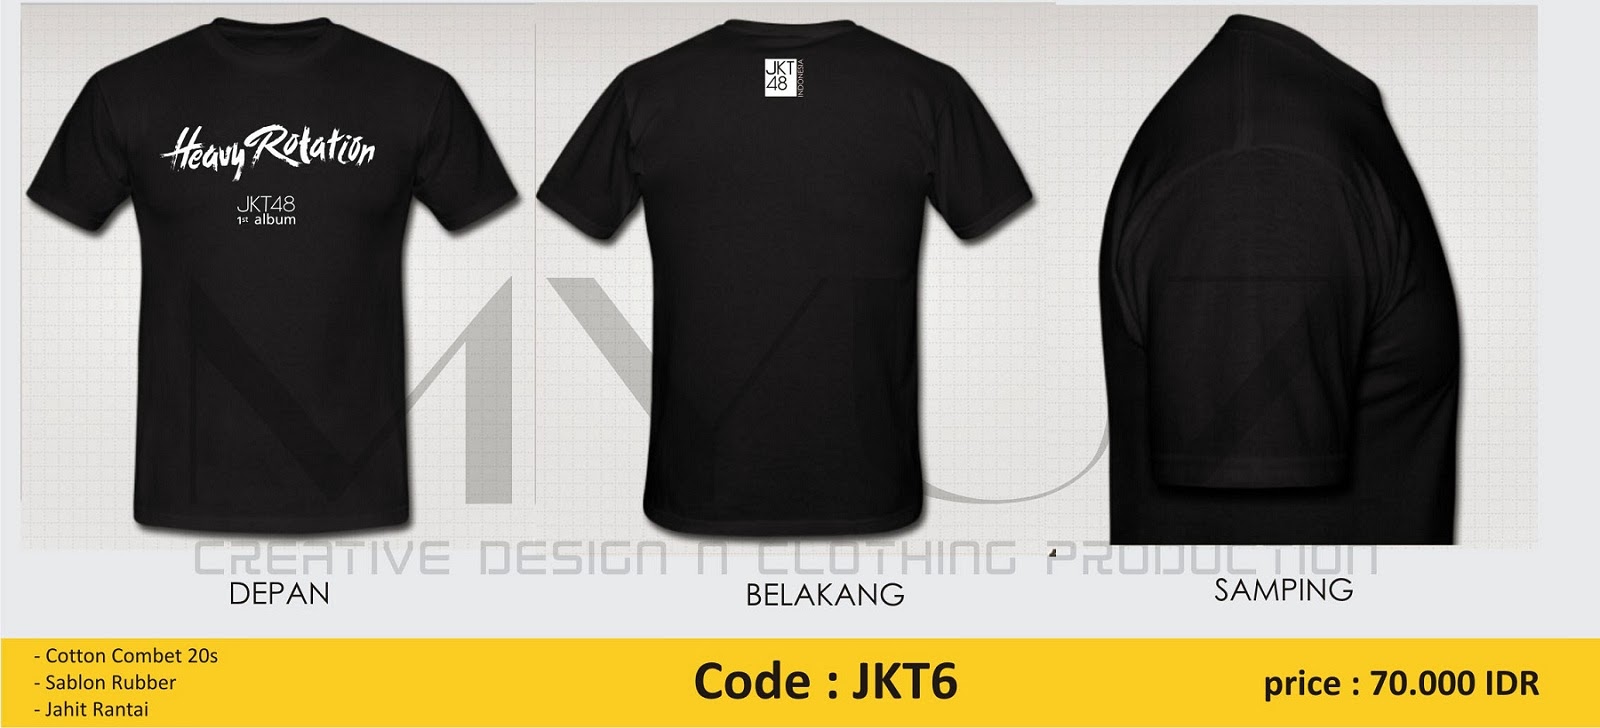 Download Gambar Kaosjkt48shop Blogspot Online Shop Kaos Jkt48 Murah Desain Heavy Rotation di Rebanas ...